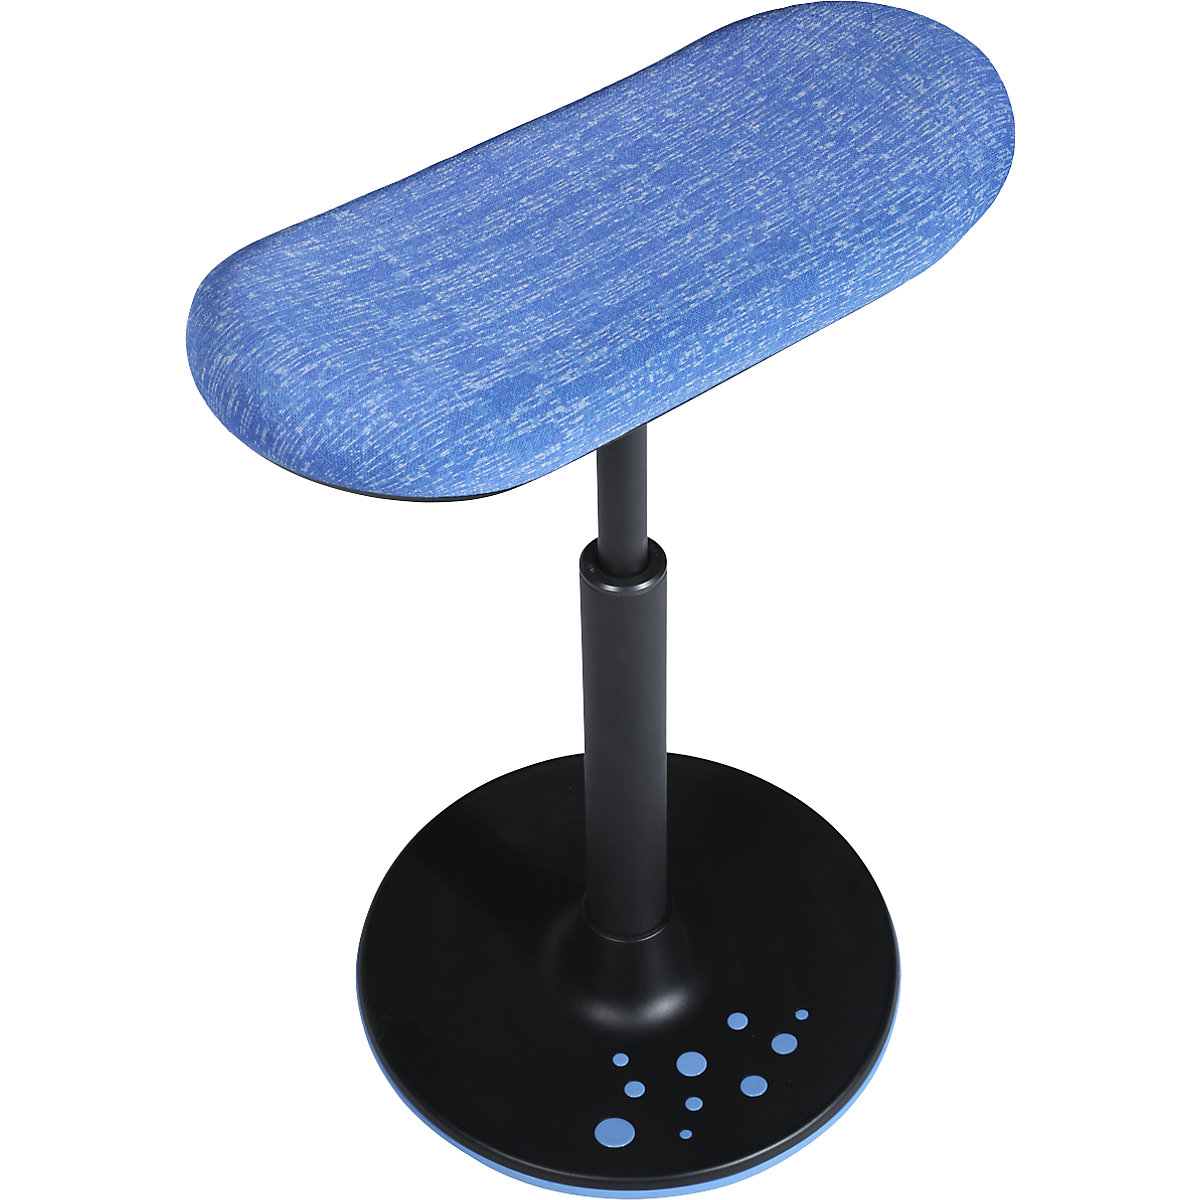 Kruk SITNESS H – Topstar, model H2, met skateboardzitting, textielbekleding blauw patroon, zool blauw-6